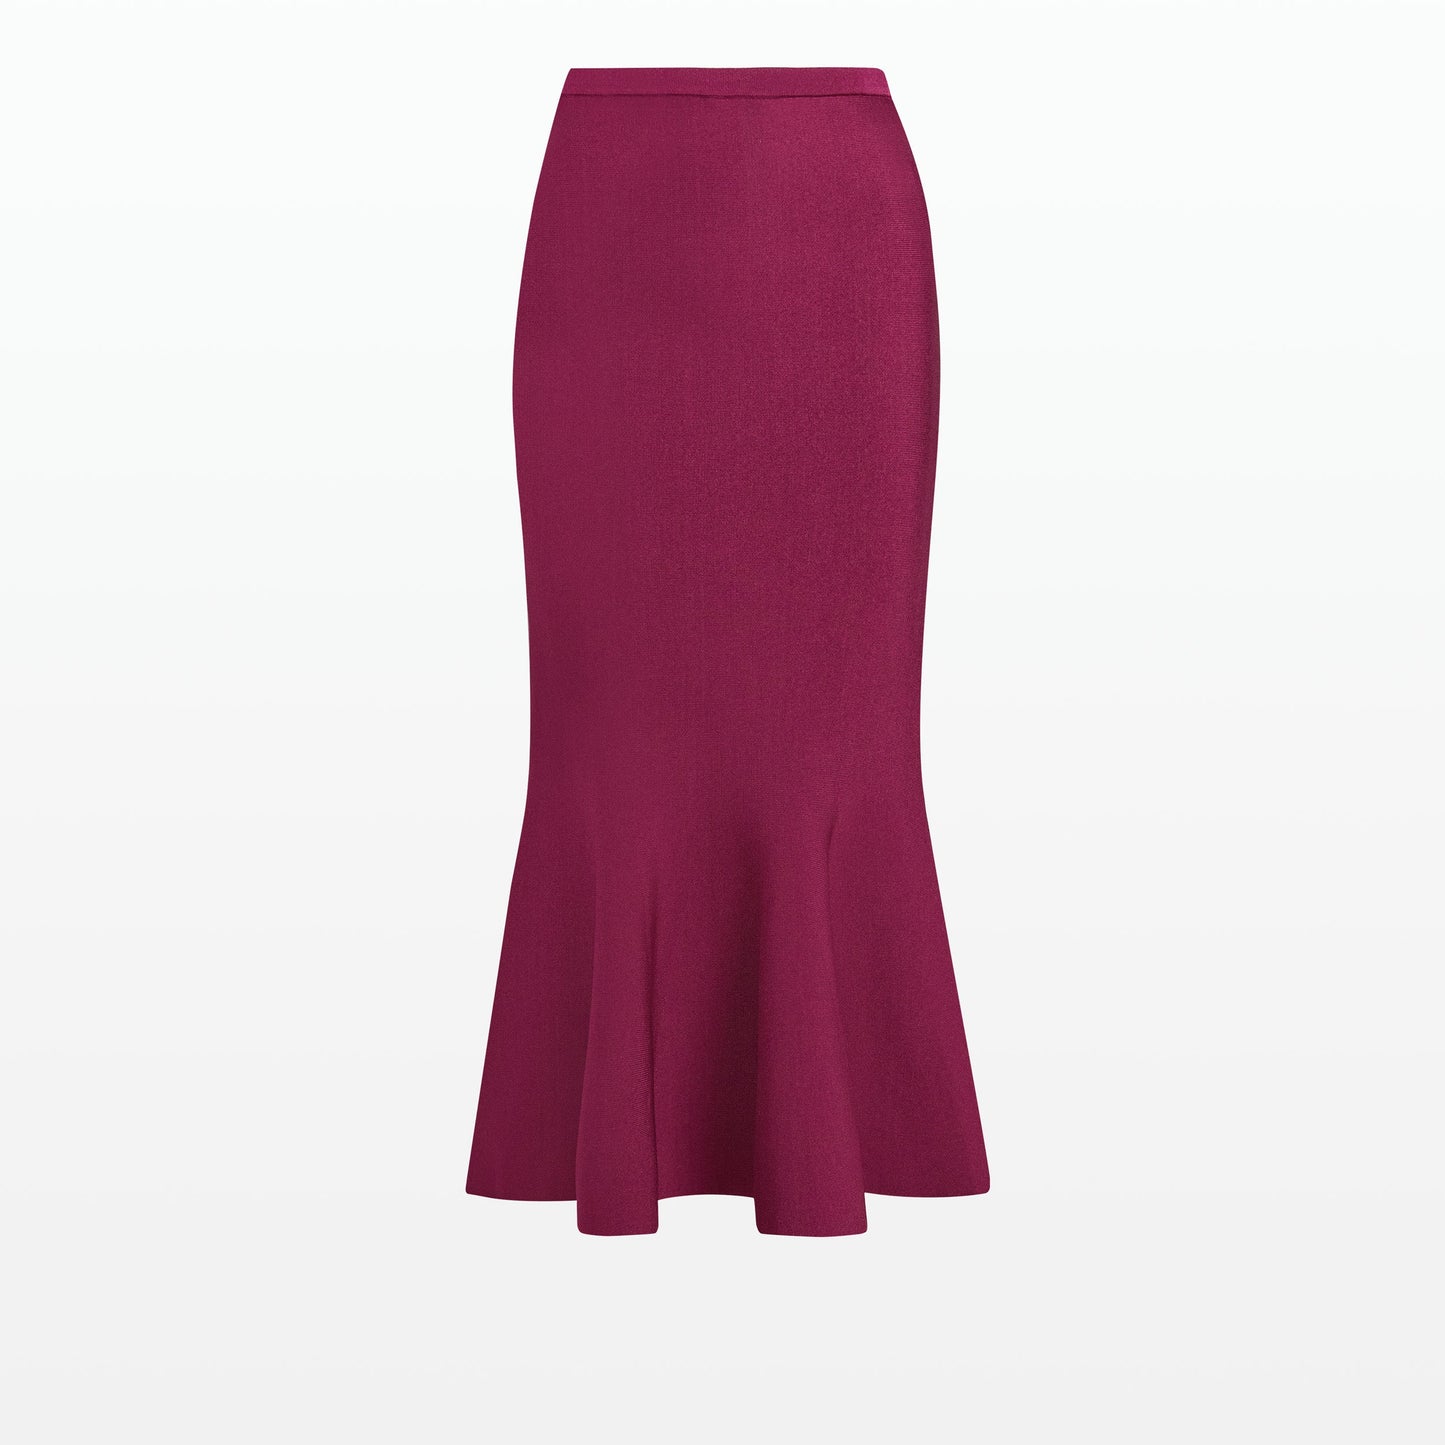 Kimberley Burgundy Knit Skirt